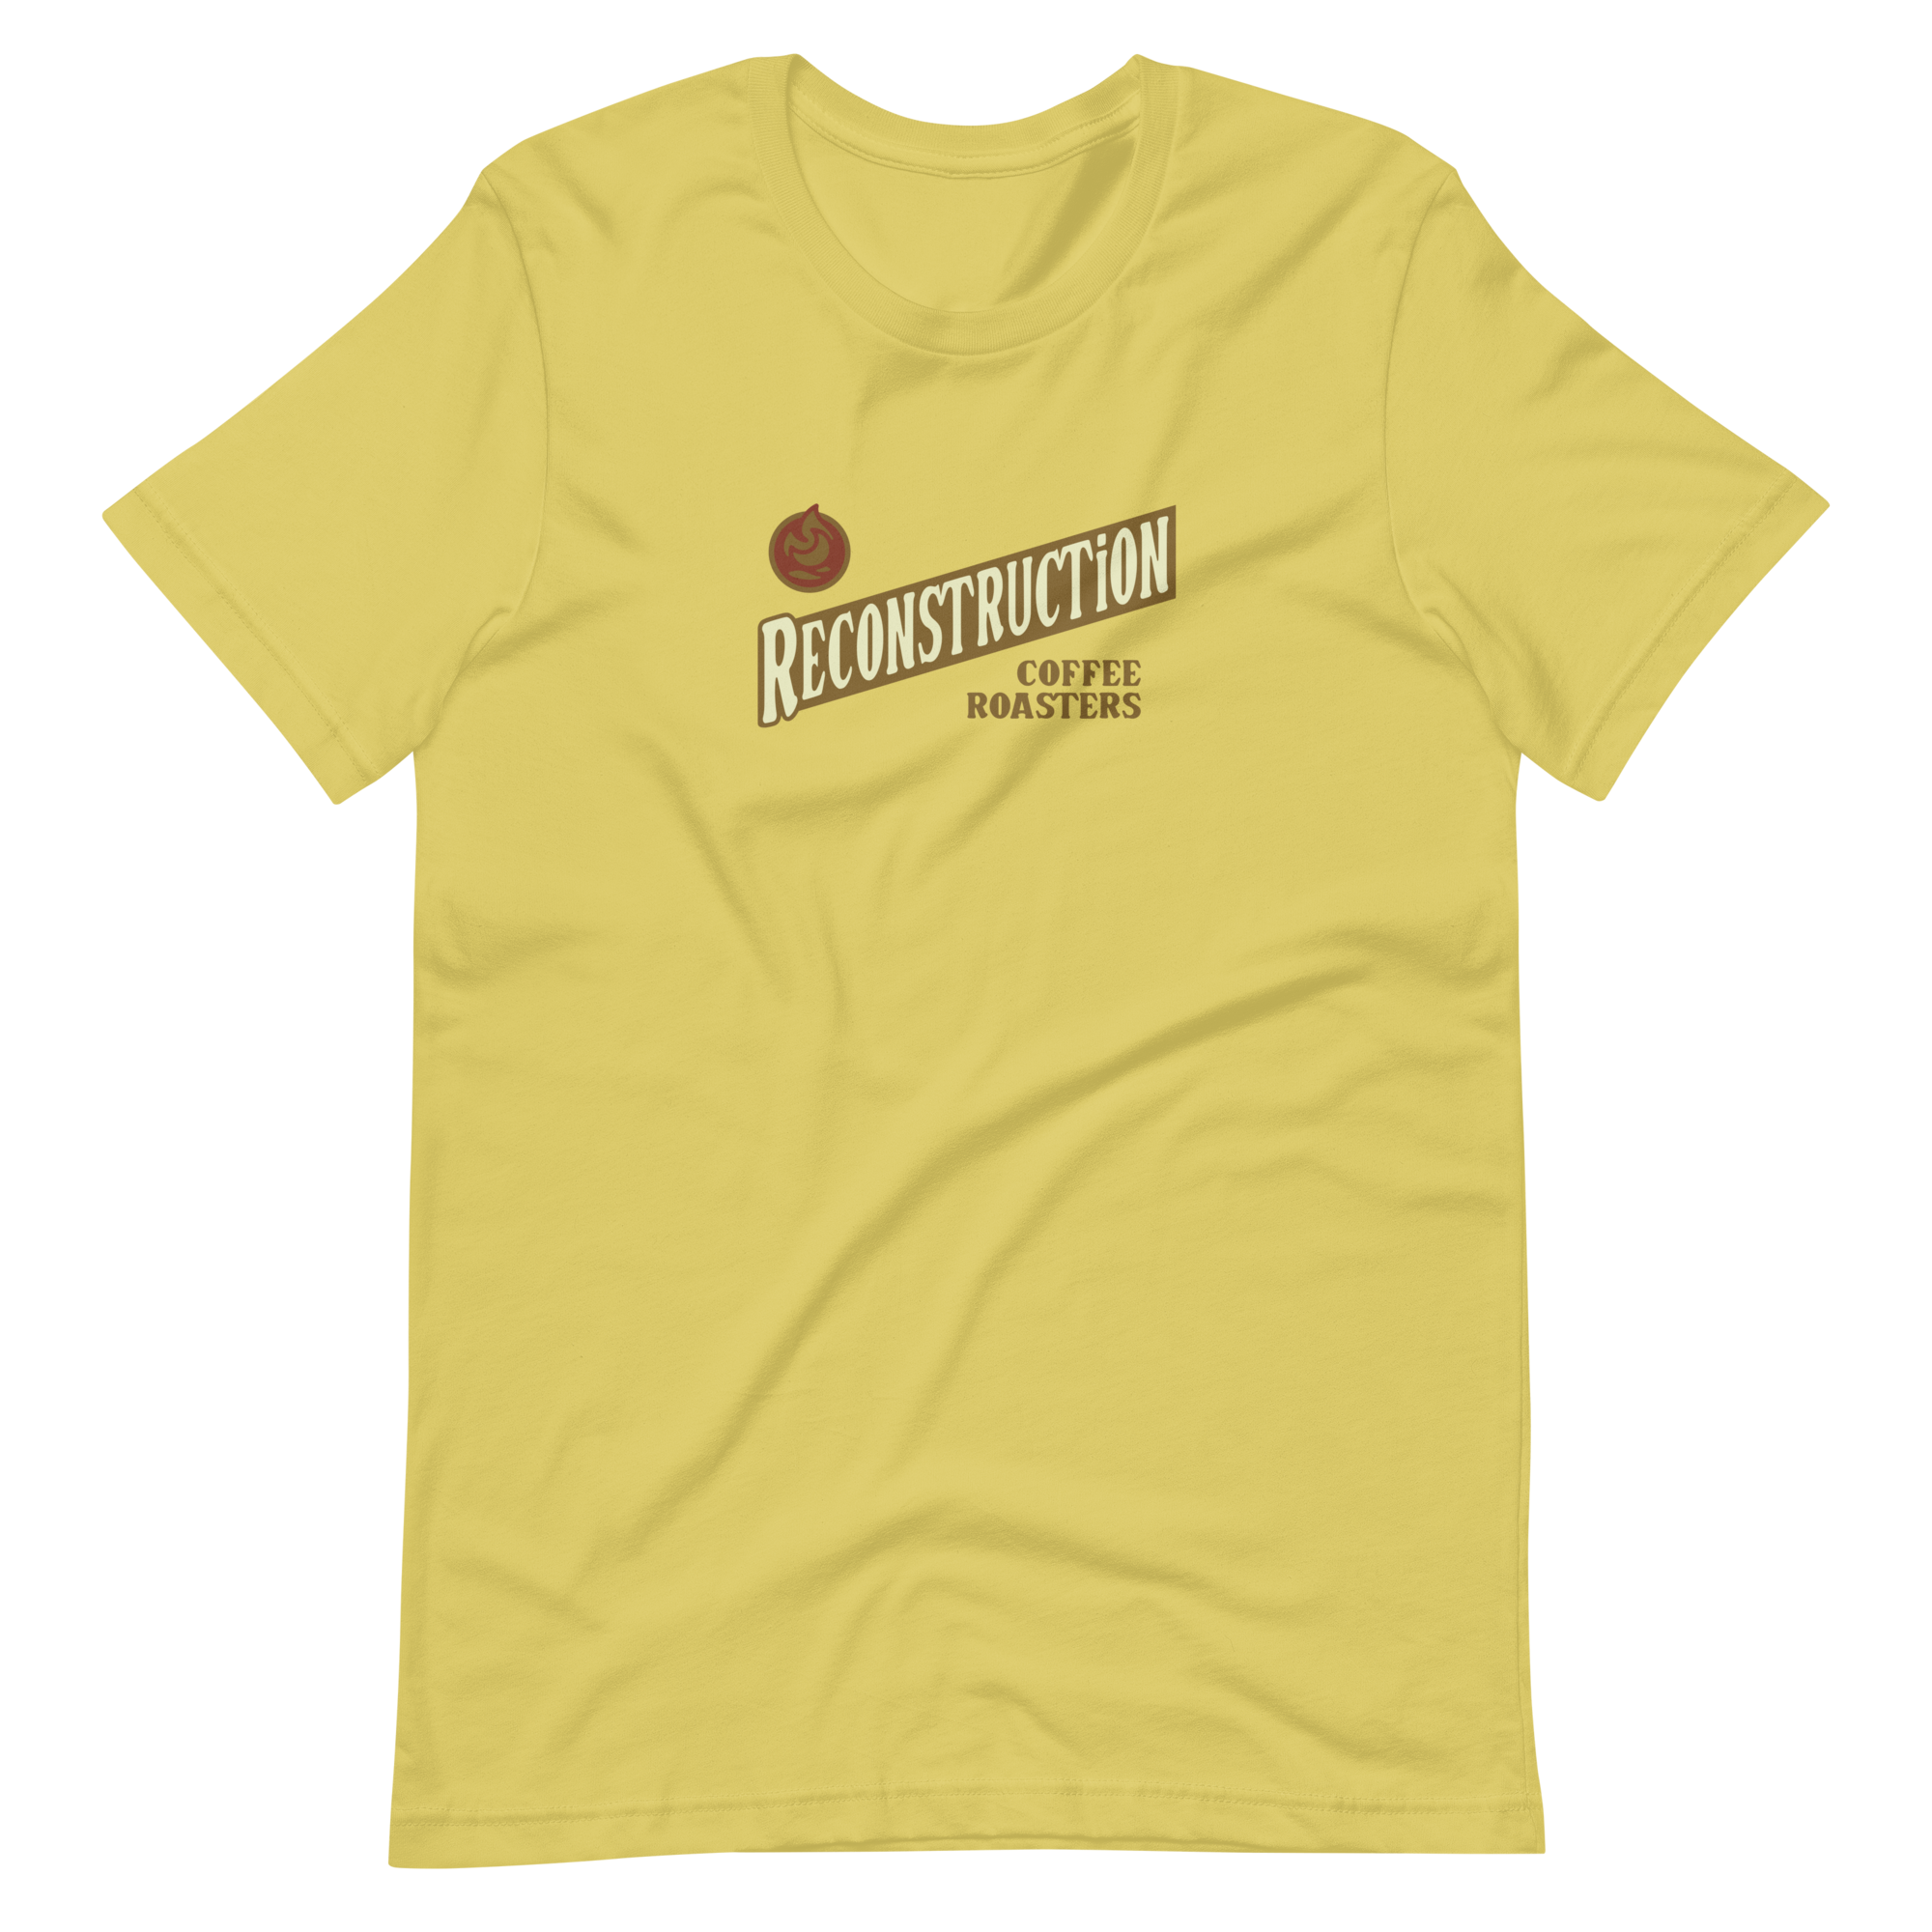 "Reconstruction" T-Shirt